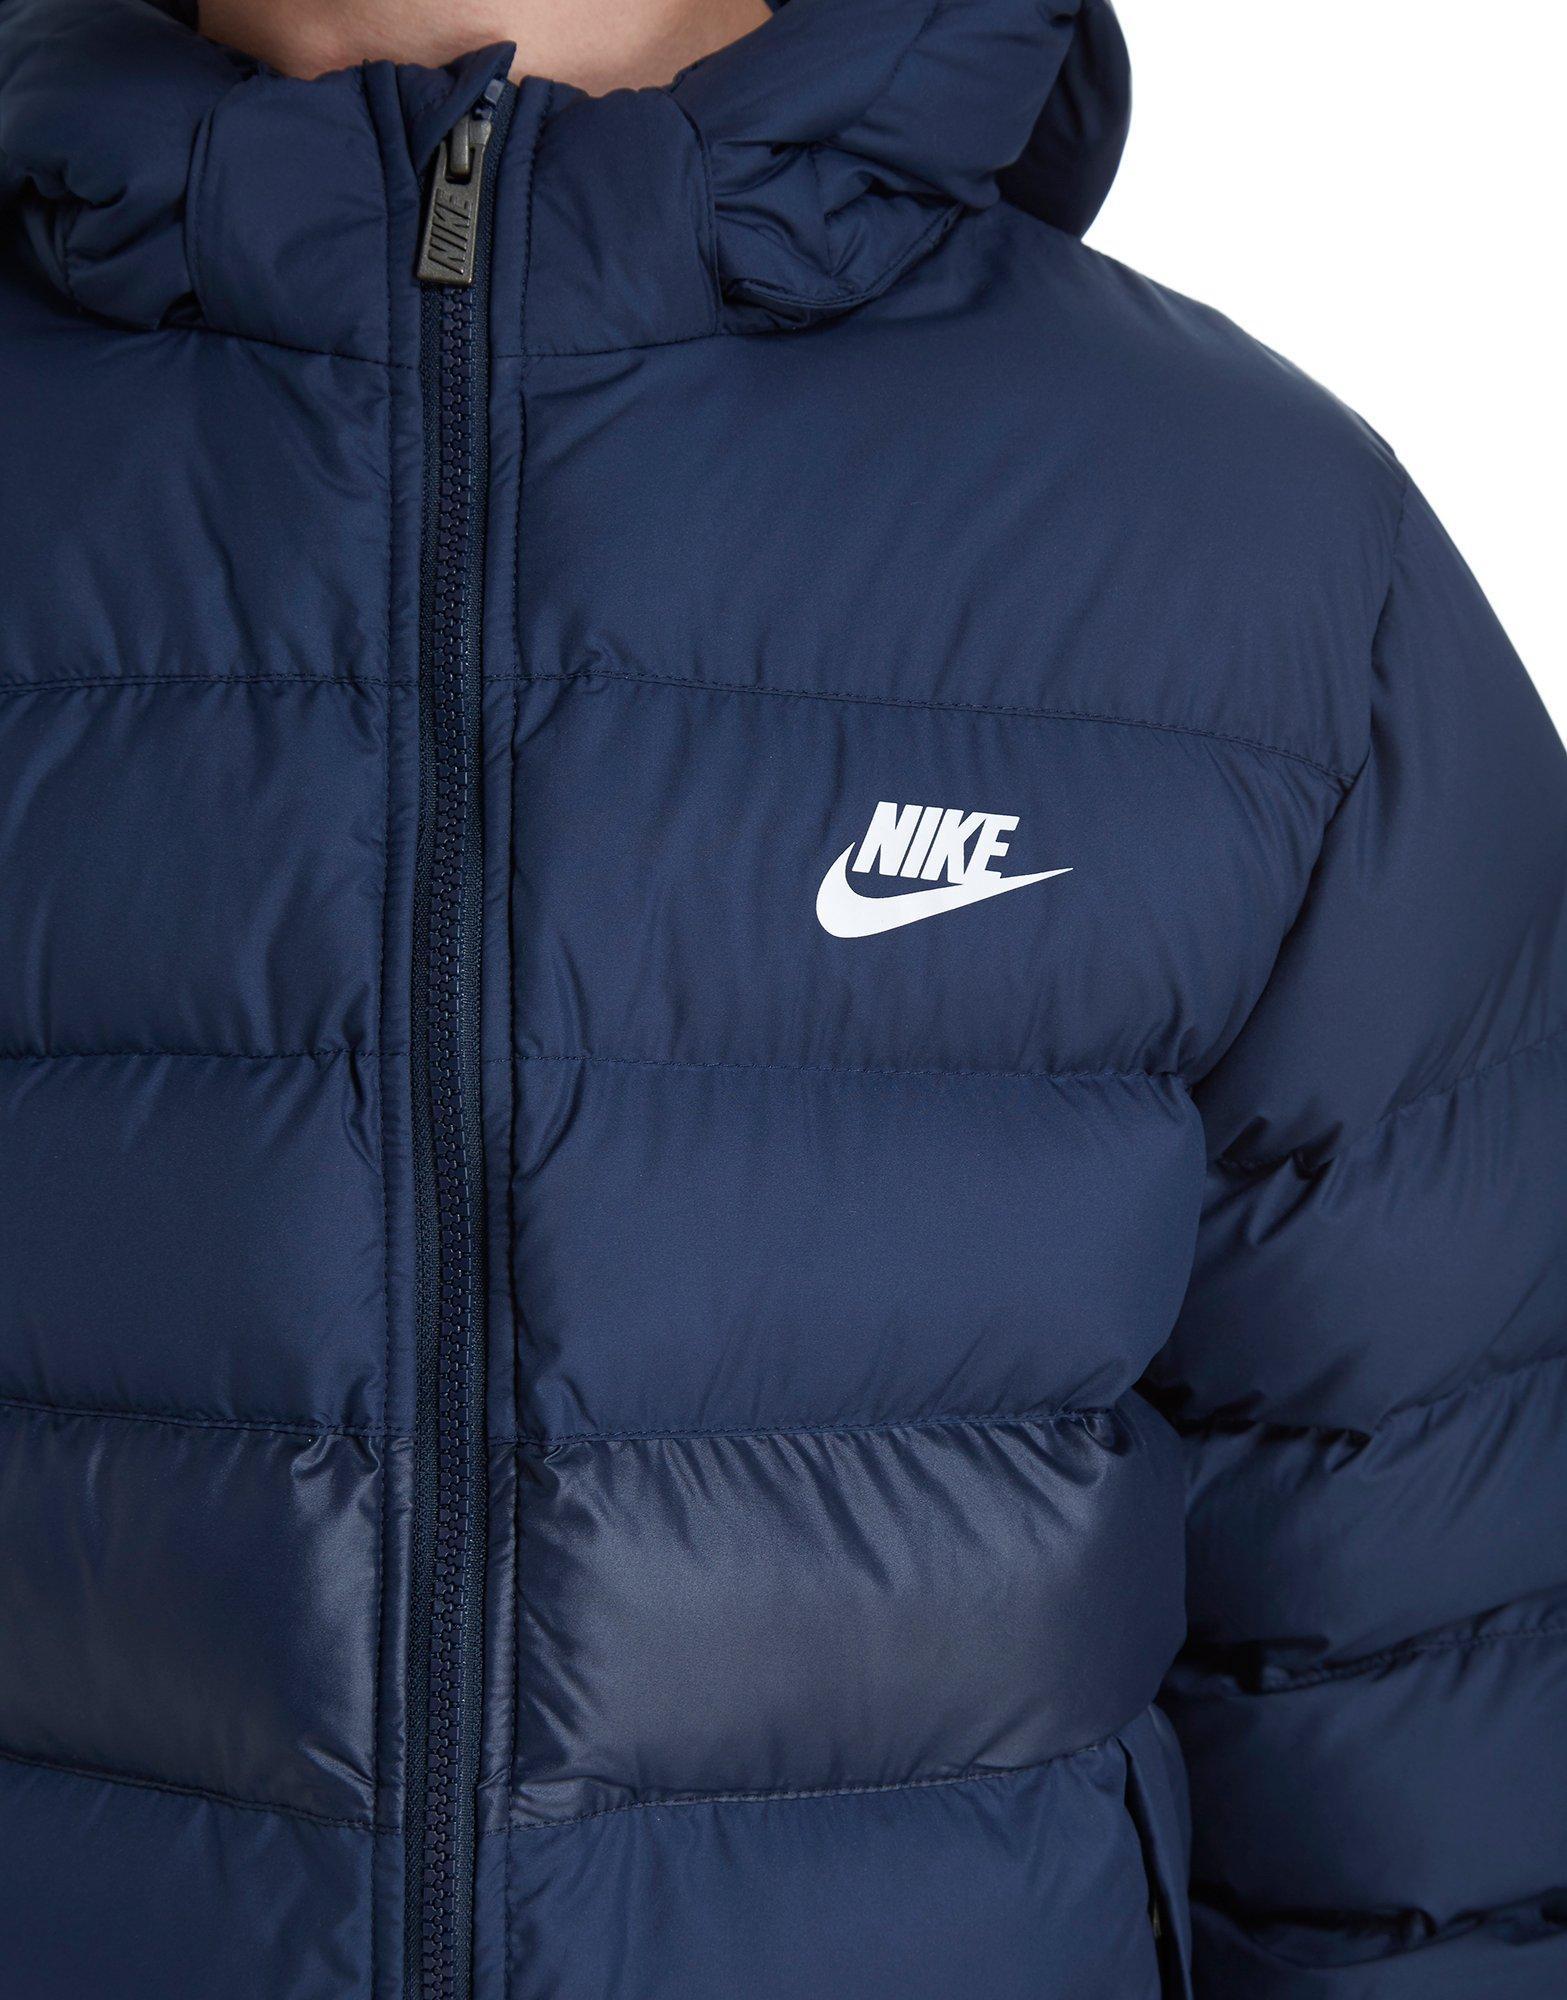 Nike Synthetic Stadium Jacket Junior in Navy/White (Blue) for Men - Lyst